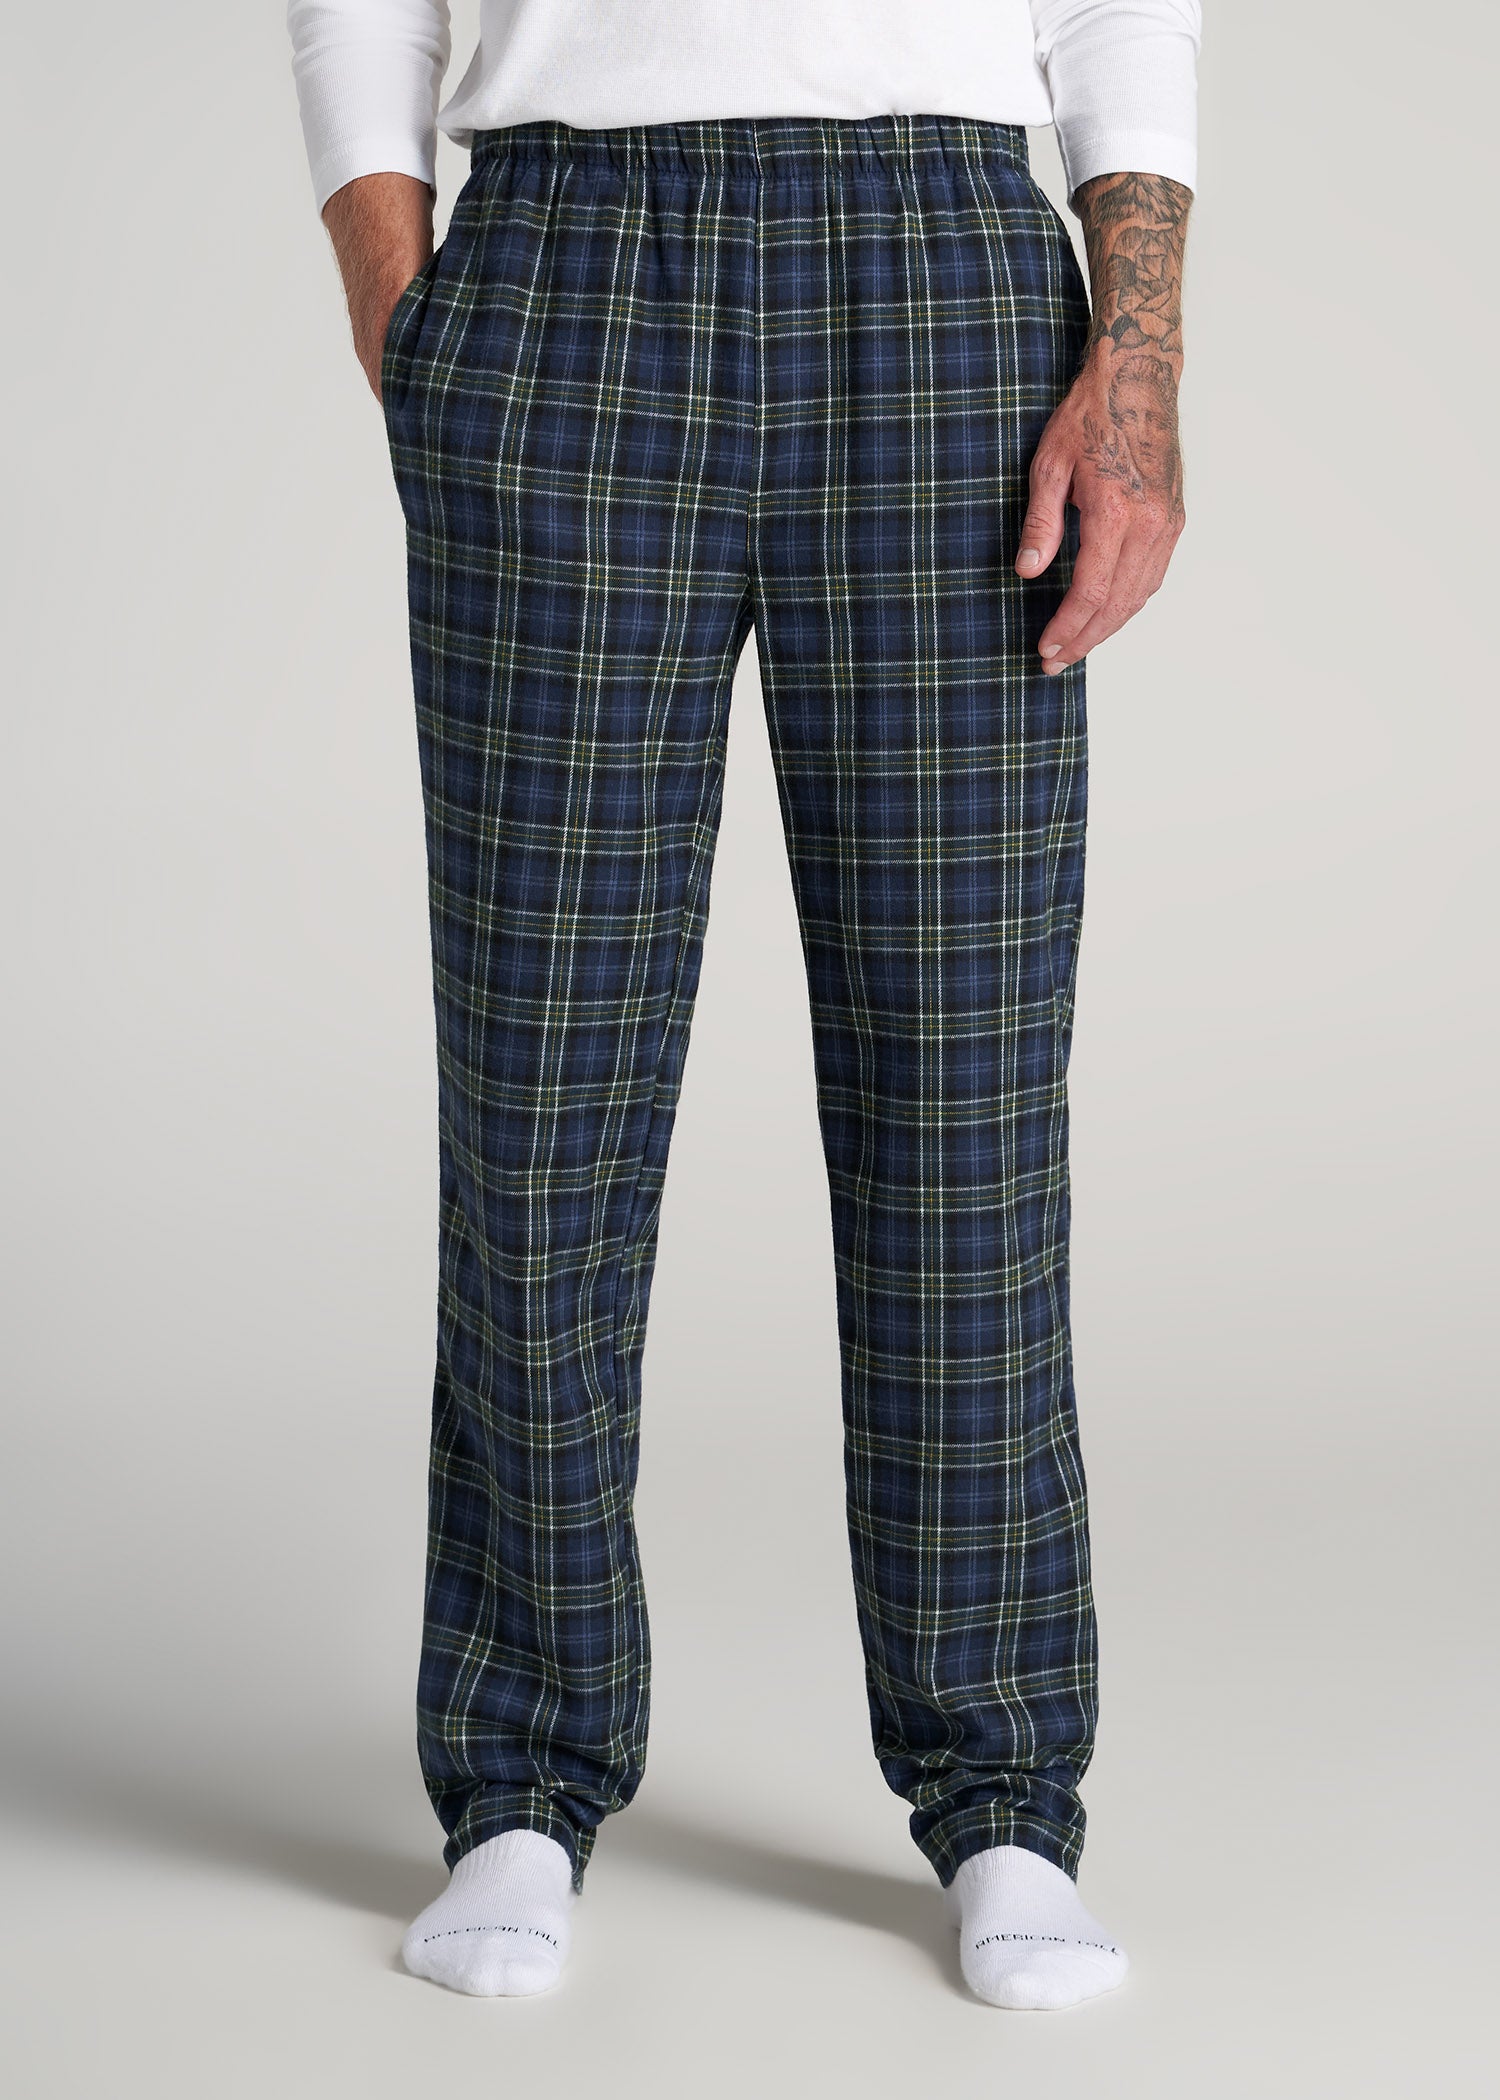 Plaid Pajama Pants for Tall Men | American Tall